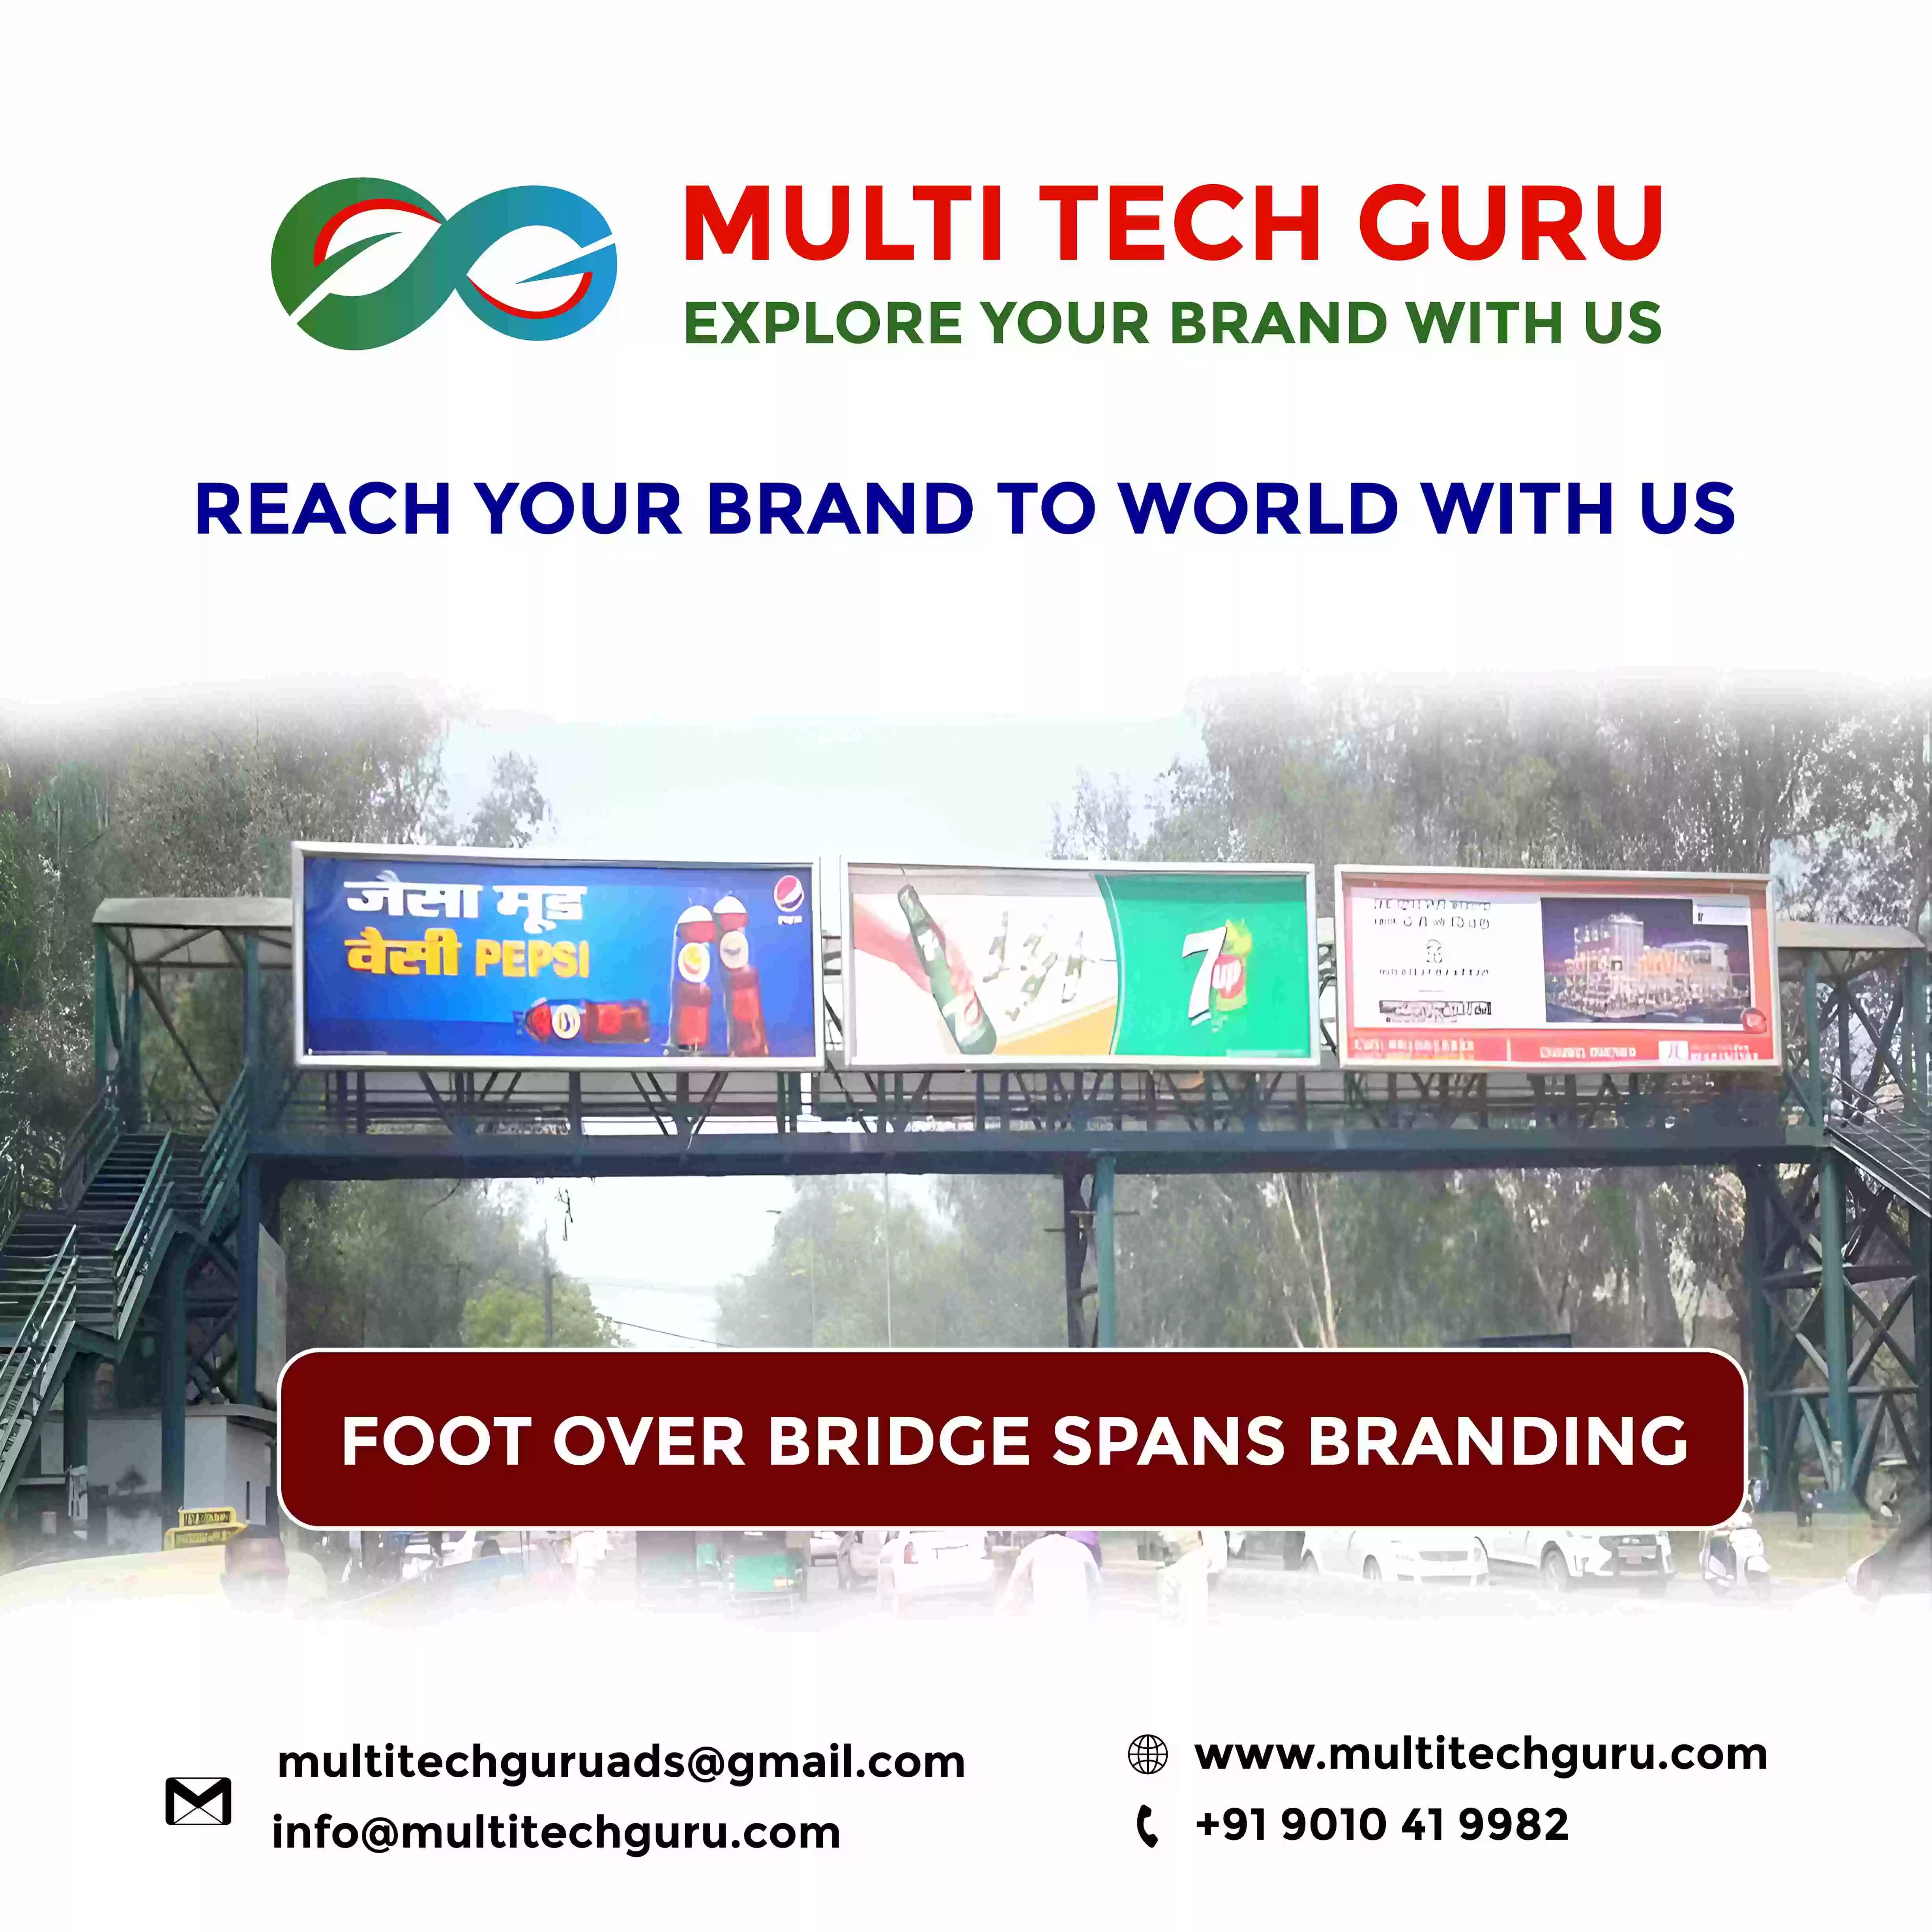 Footover-Bridge-Branding-advertising-marketing-Multitechguru.com-9010419982-Outdoor-media-advertising-Print-Media-Services.jpg